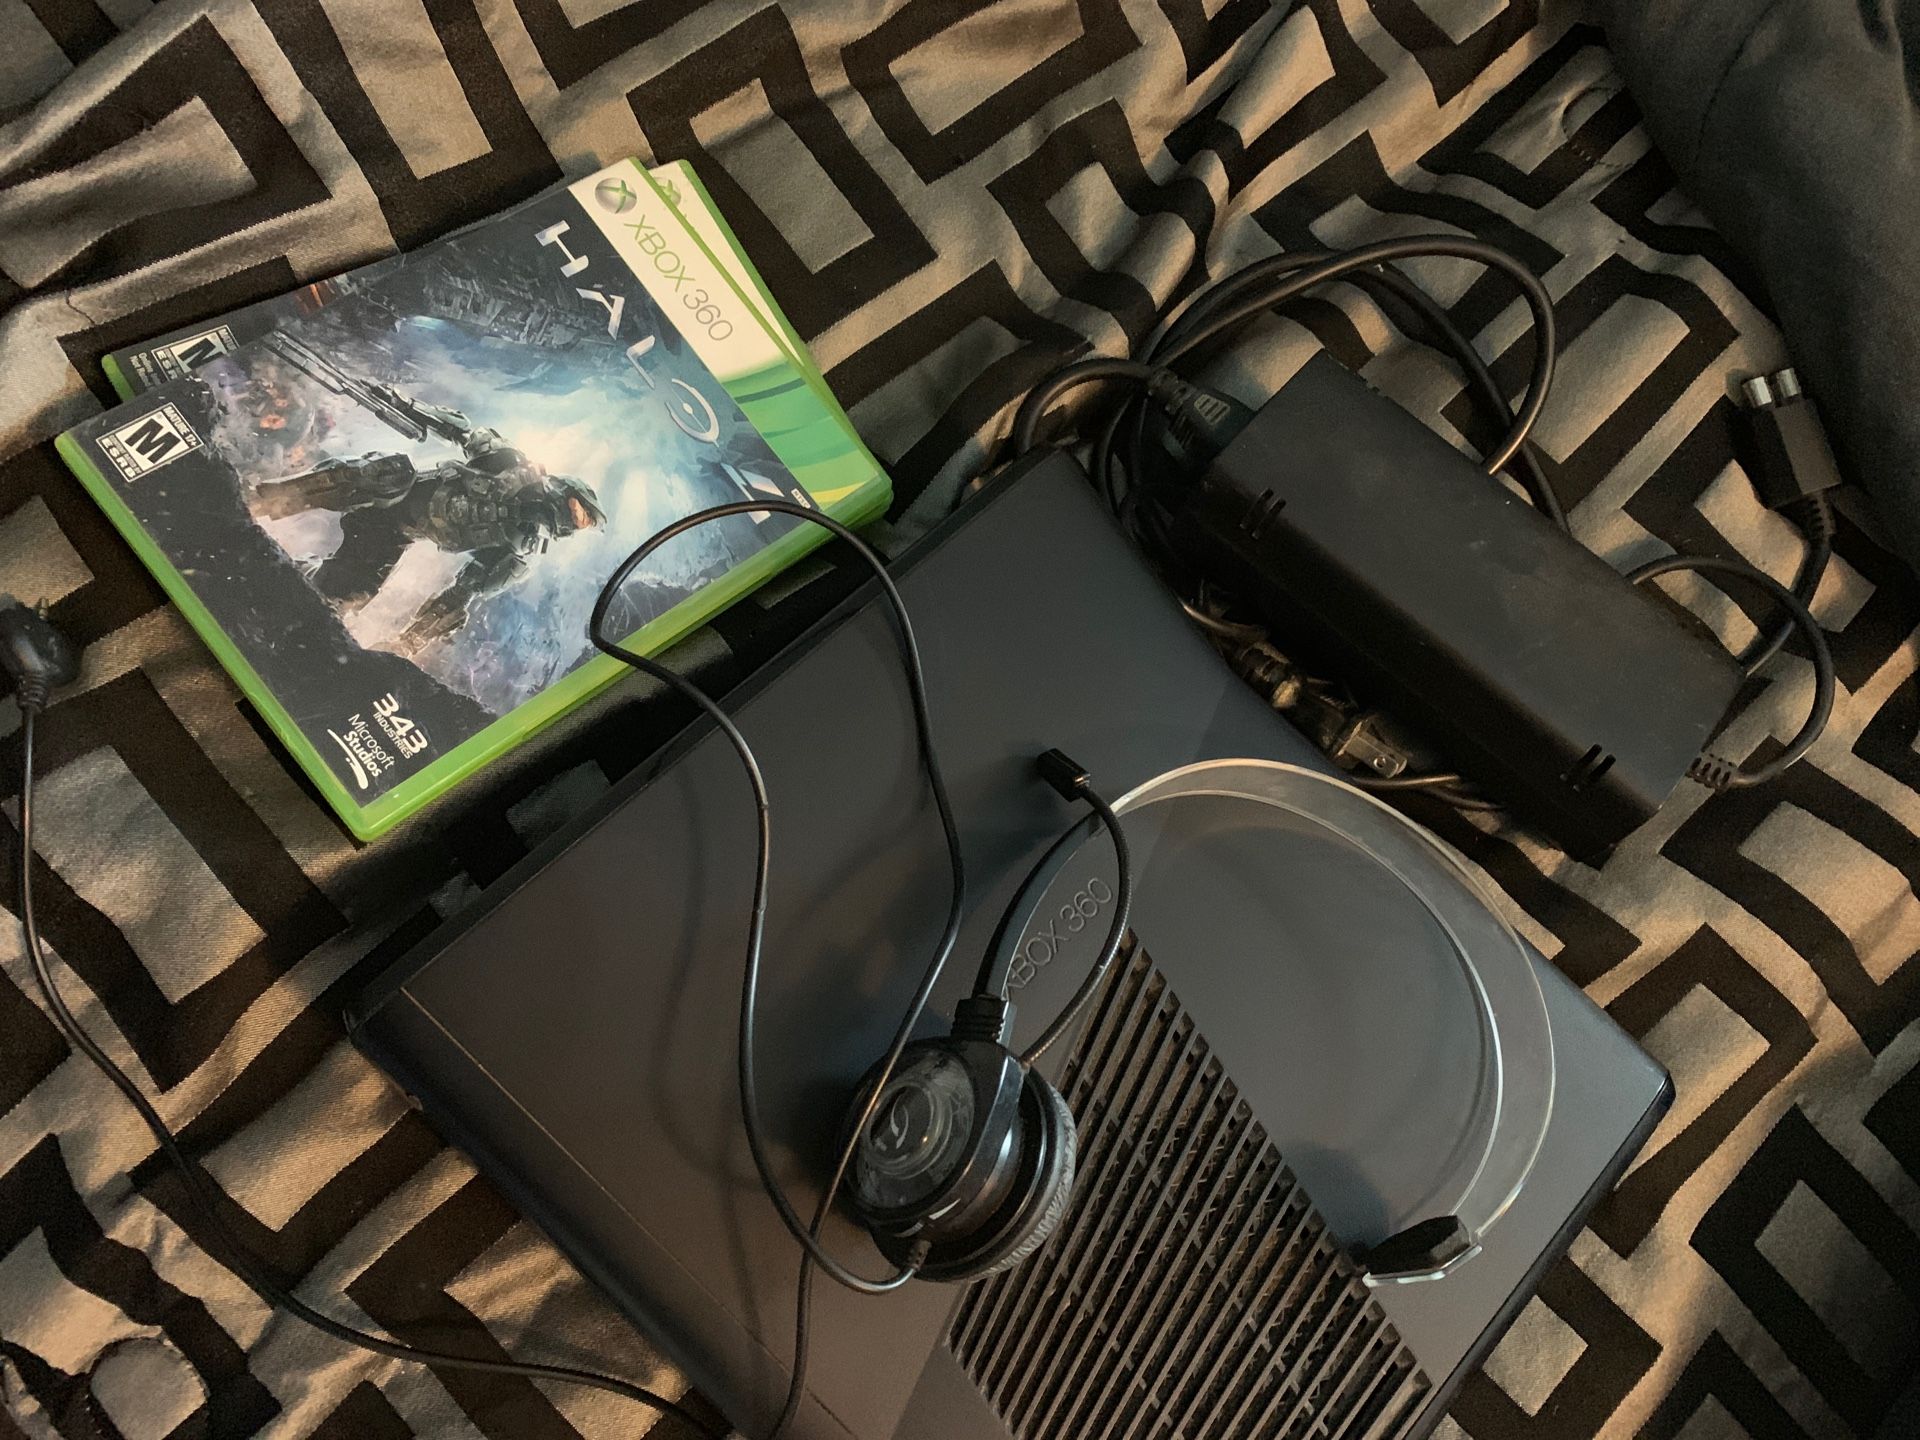 Xbox 360 slim with headphones (no controller) 2 games